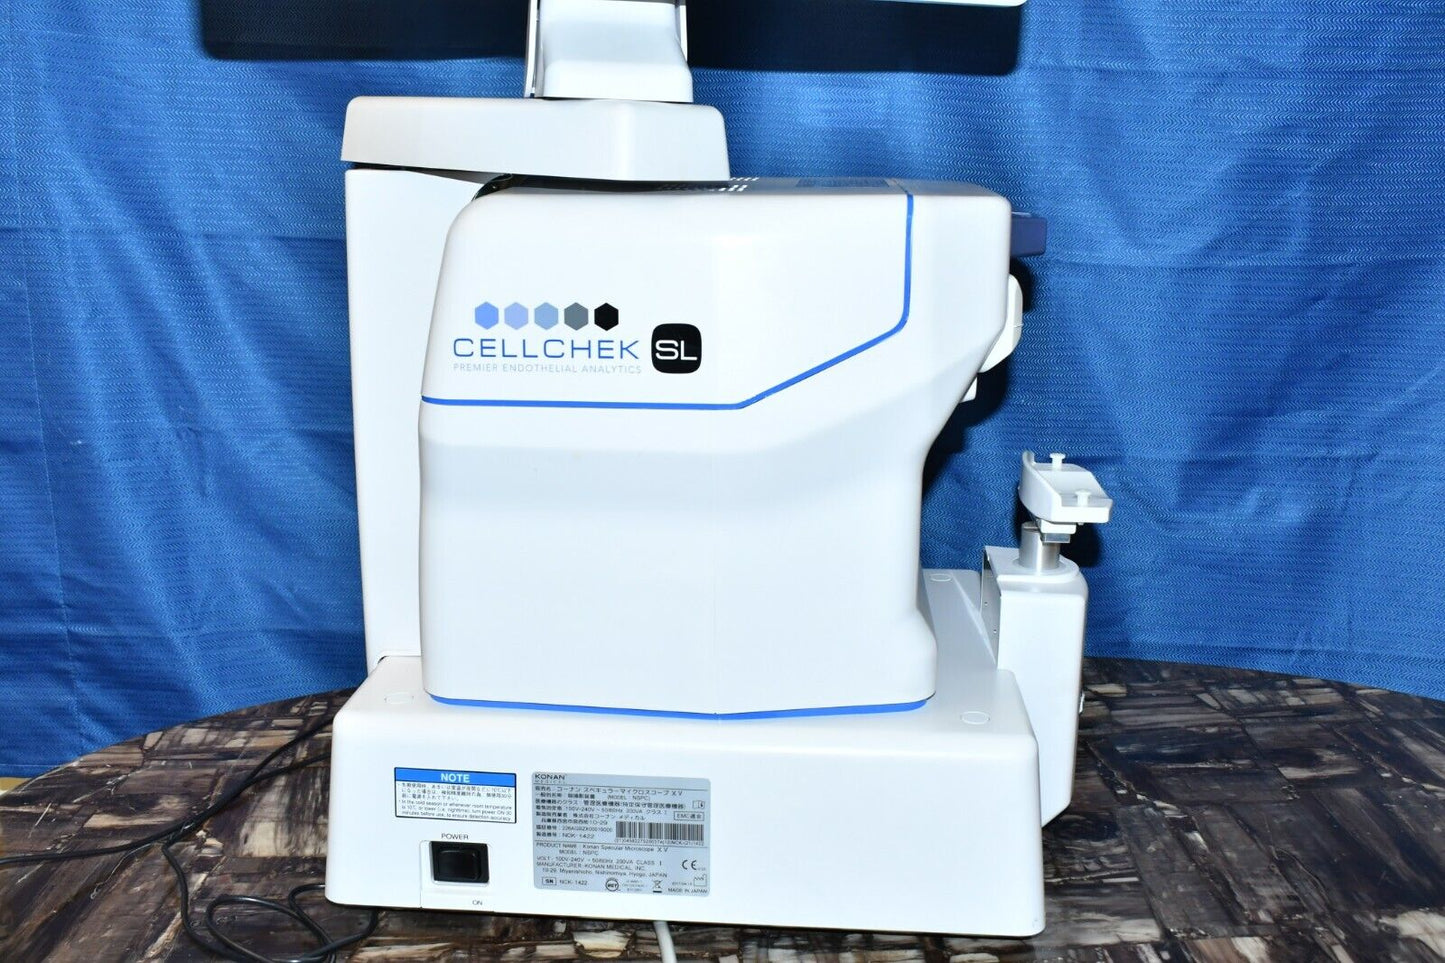 Konan CellChek SL Specular microscope pachymeter